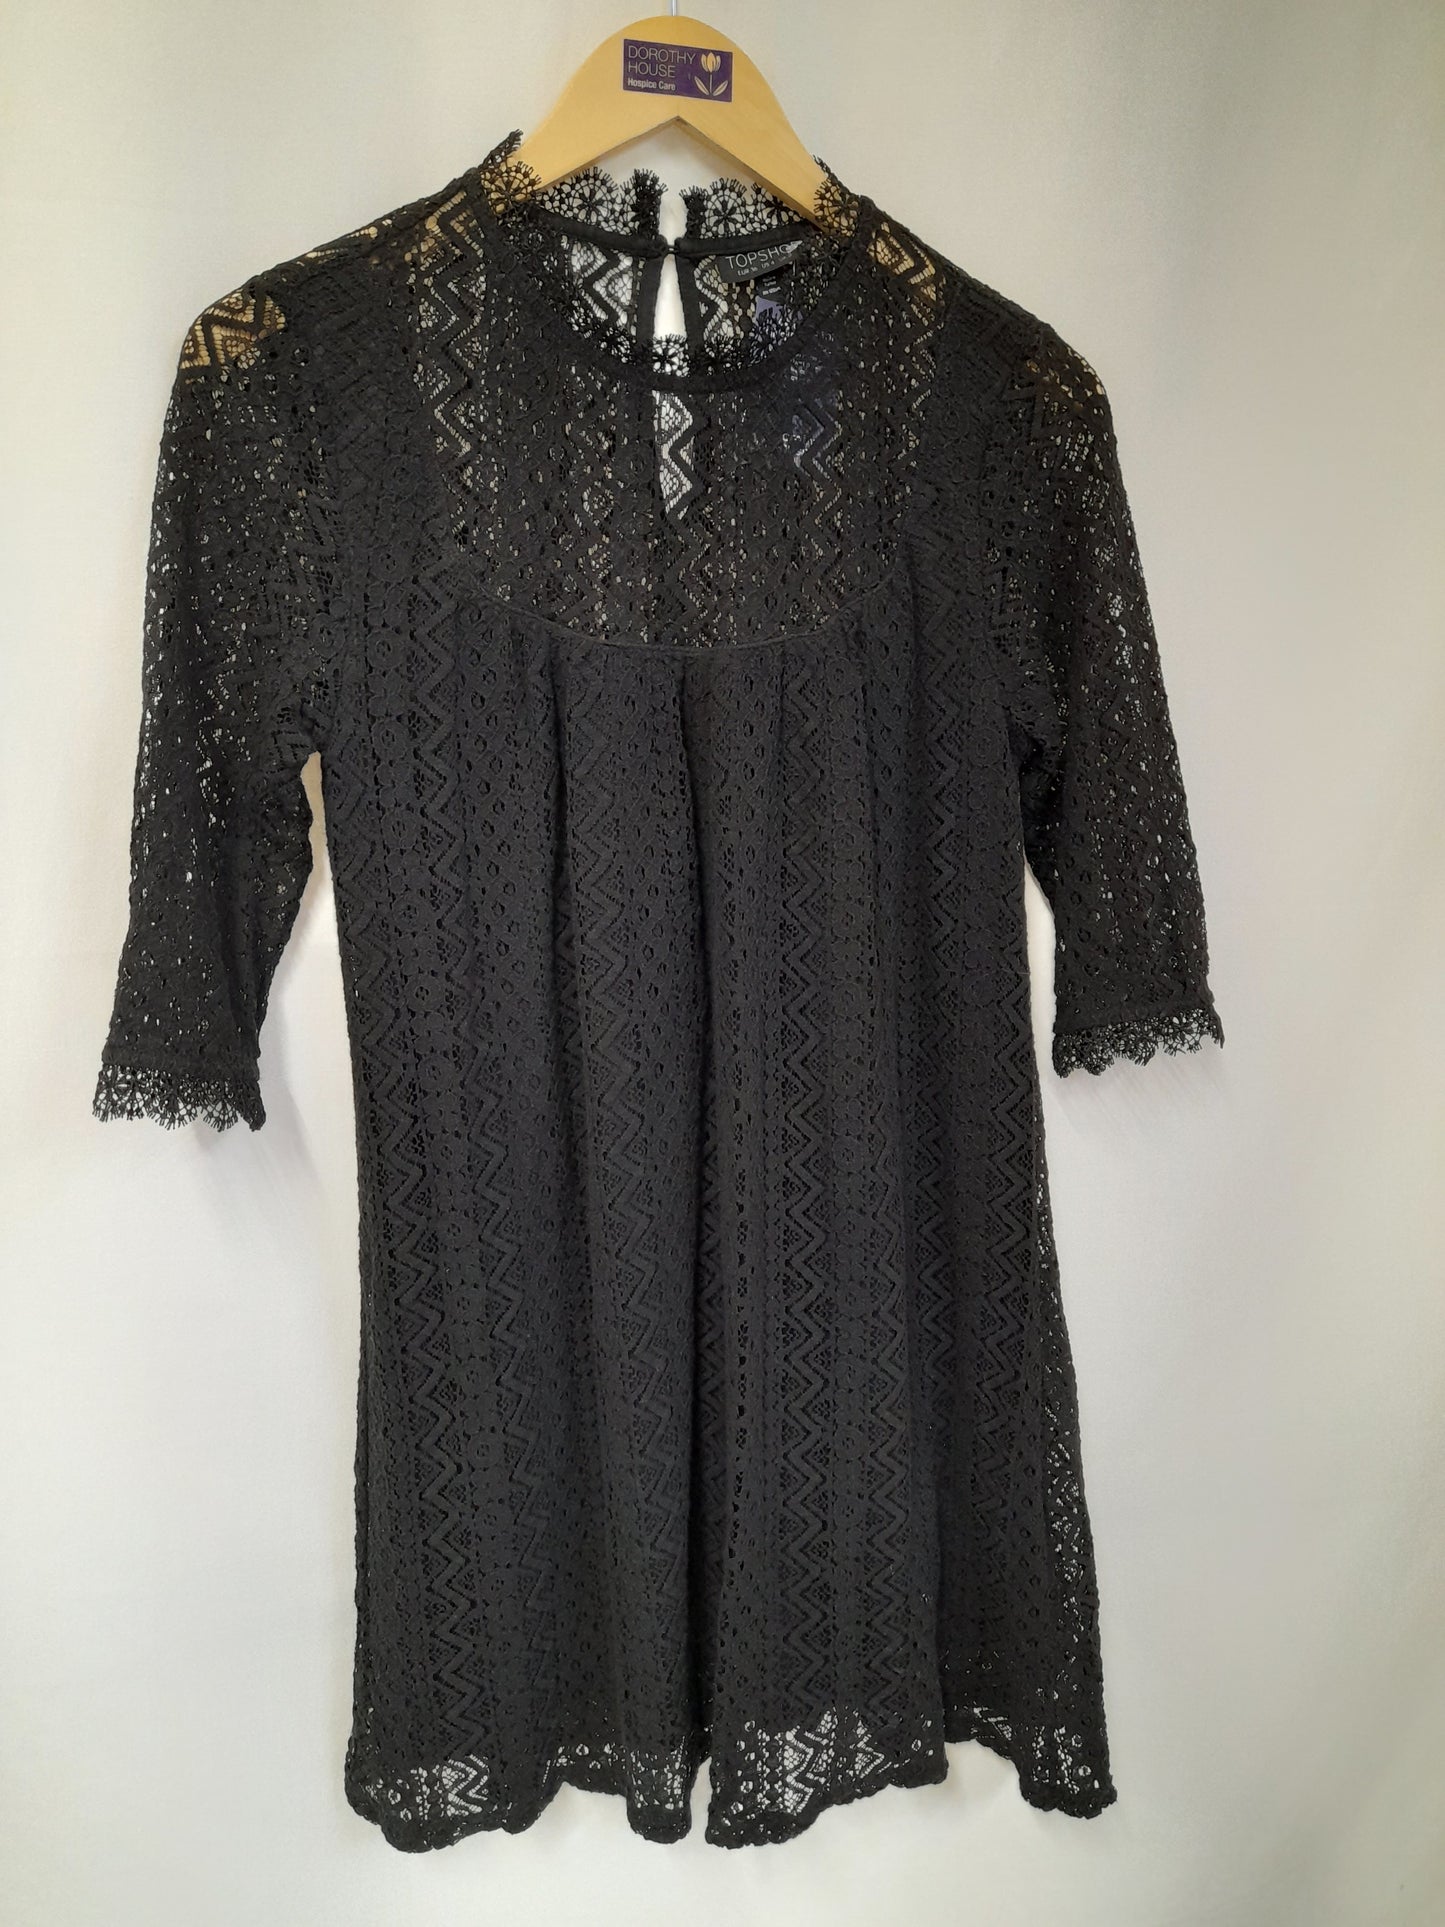 1960s Style Black Lace Overlay Mini Dress Size 8